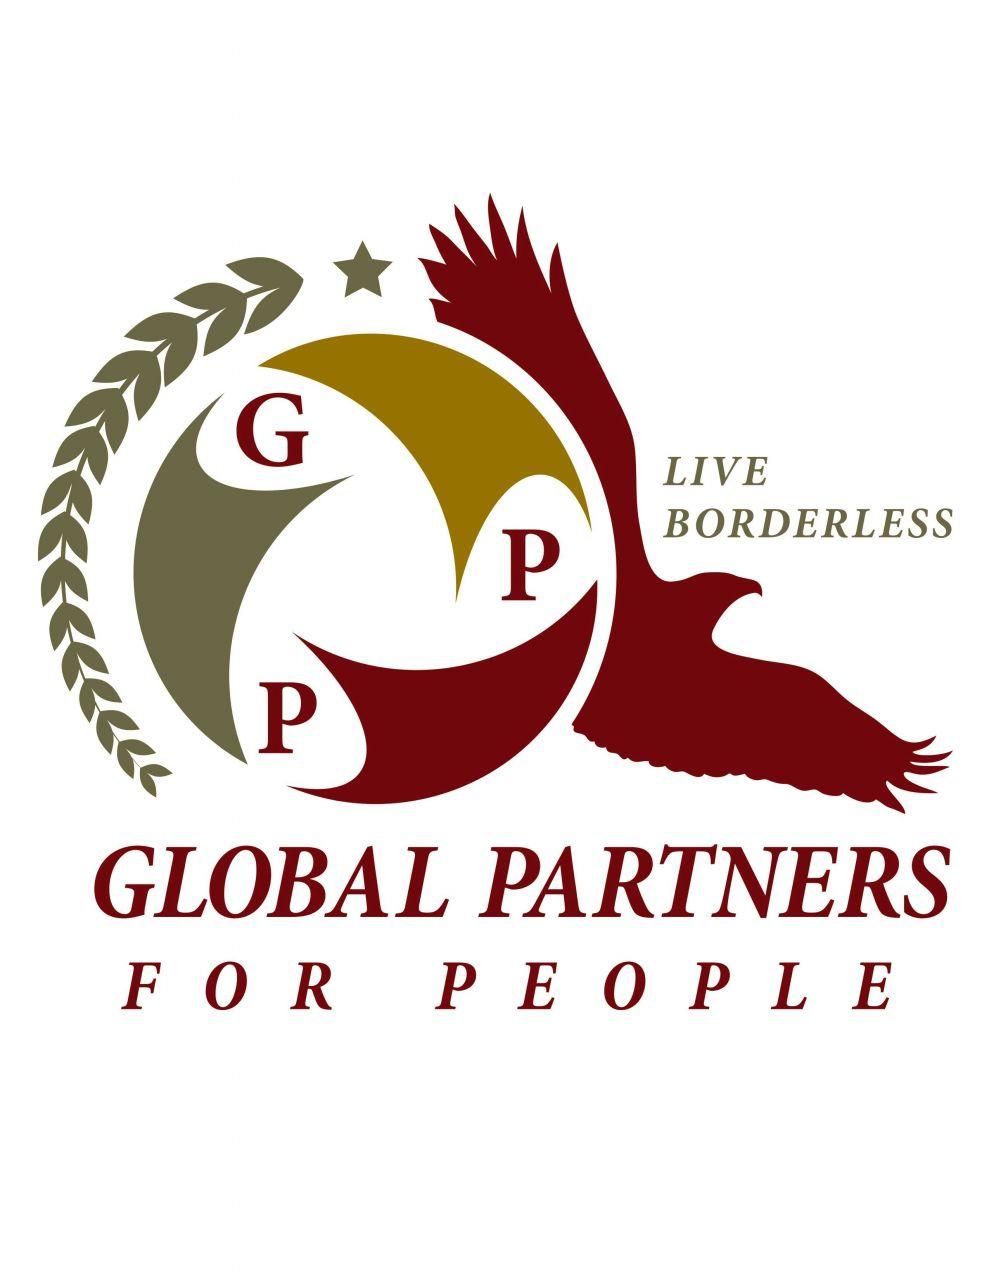 GPP Logo - Global Partners for People logo